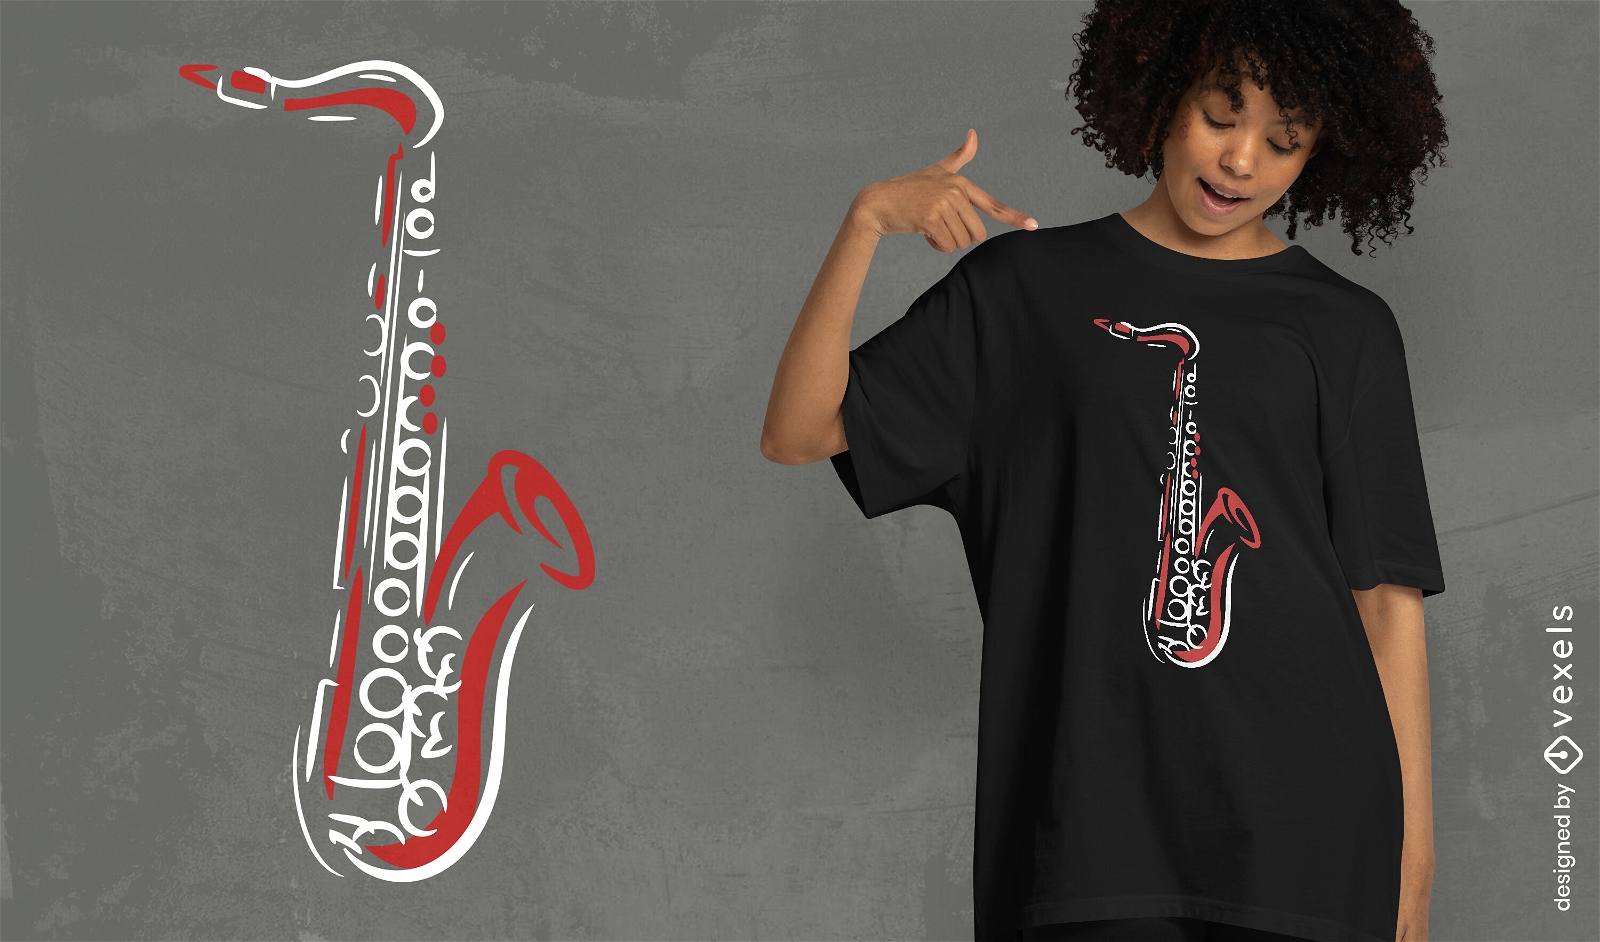 Diseño de camiseta de líneas musicales de saxofón.